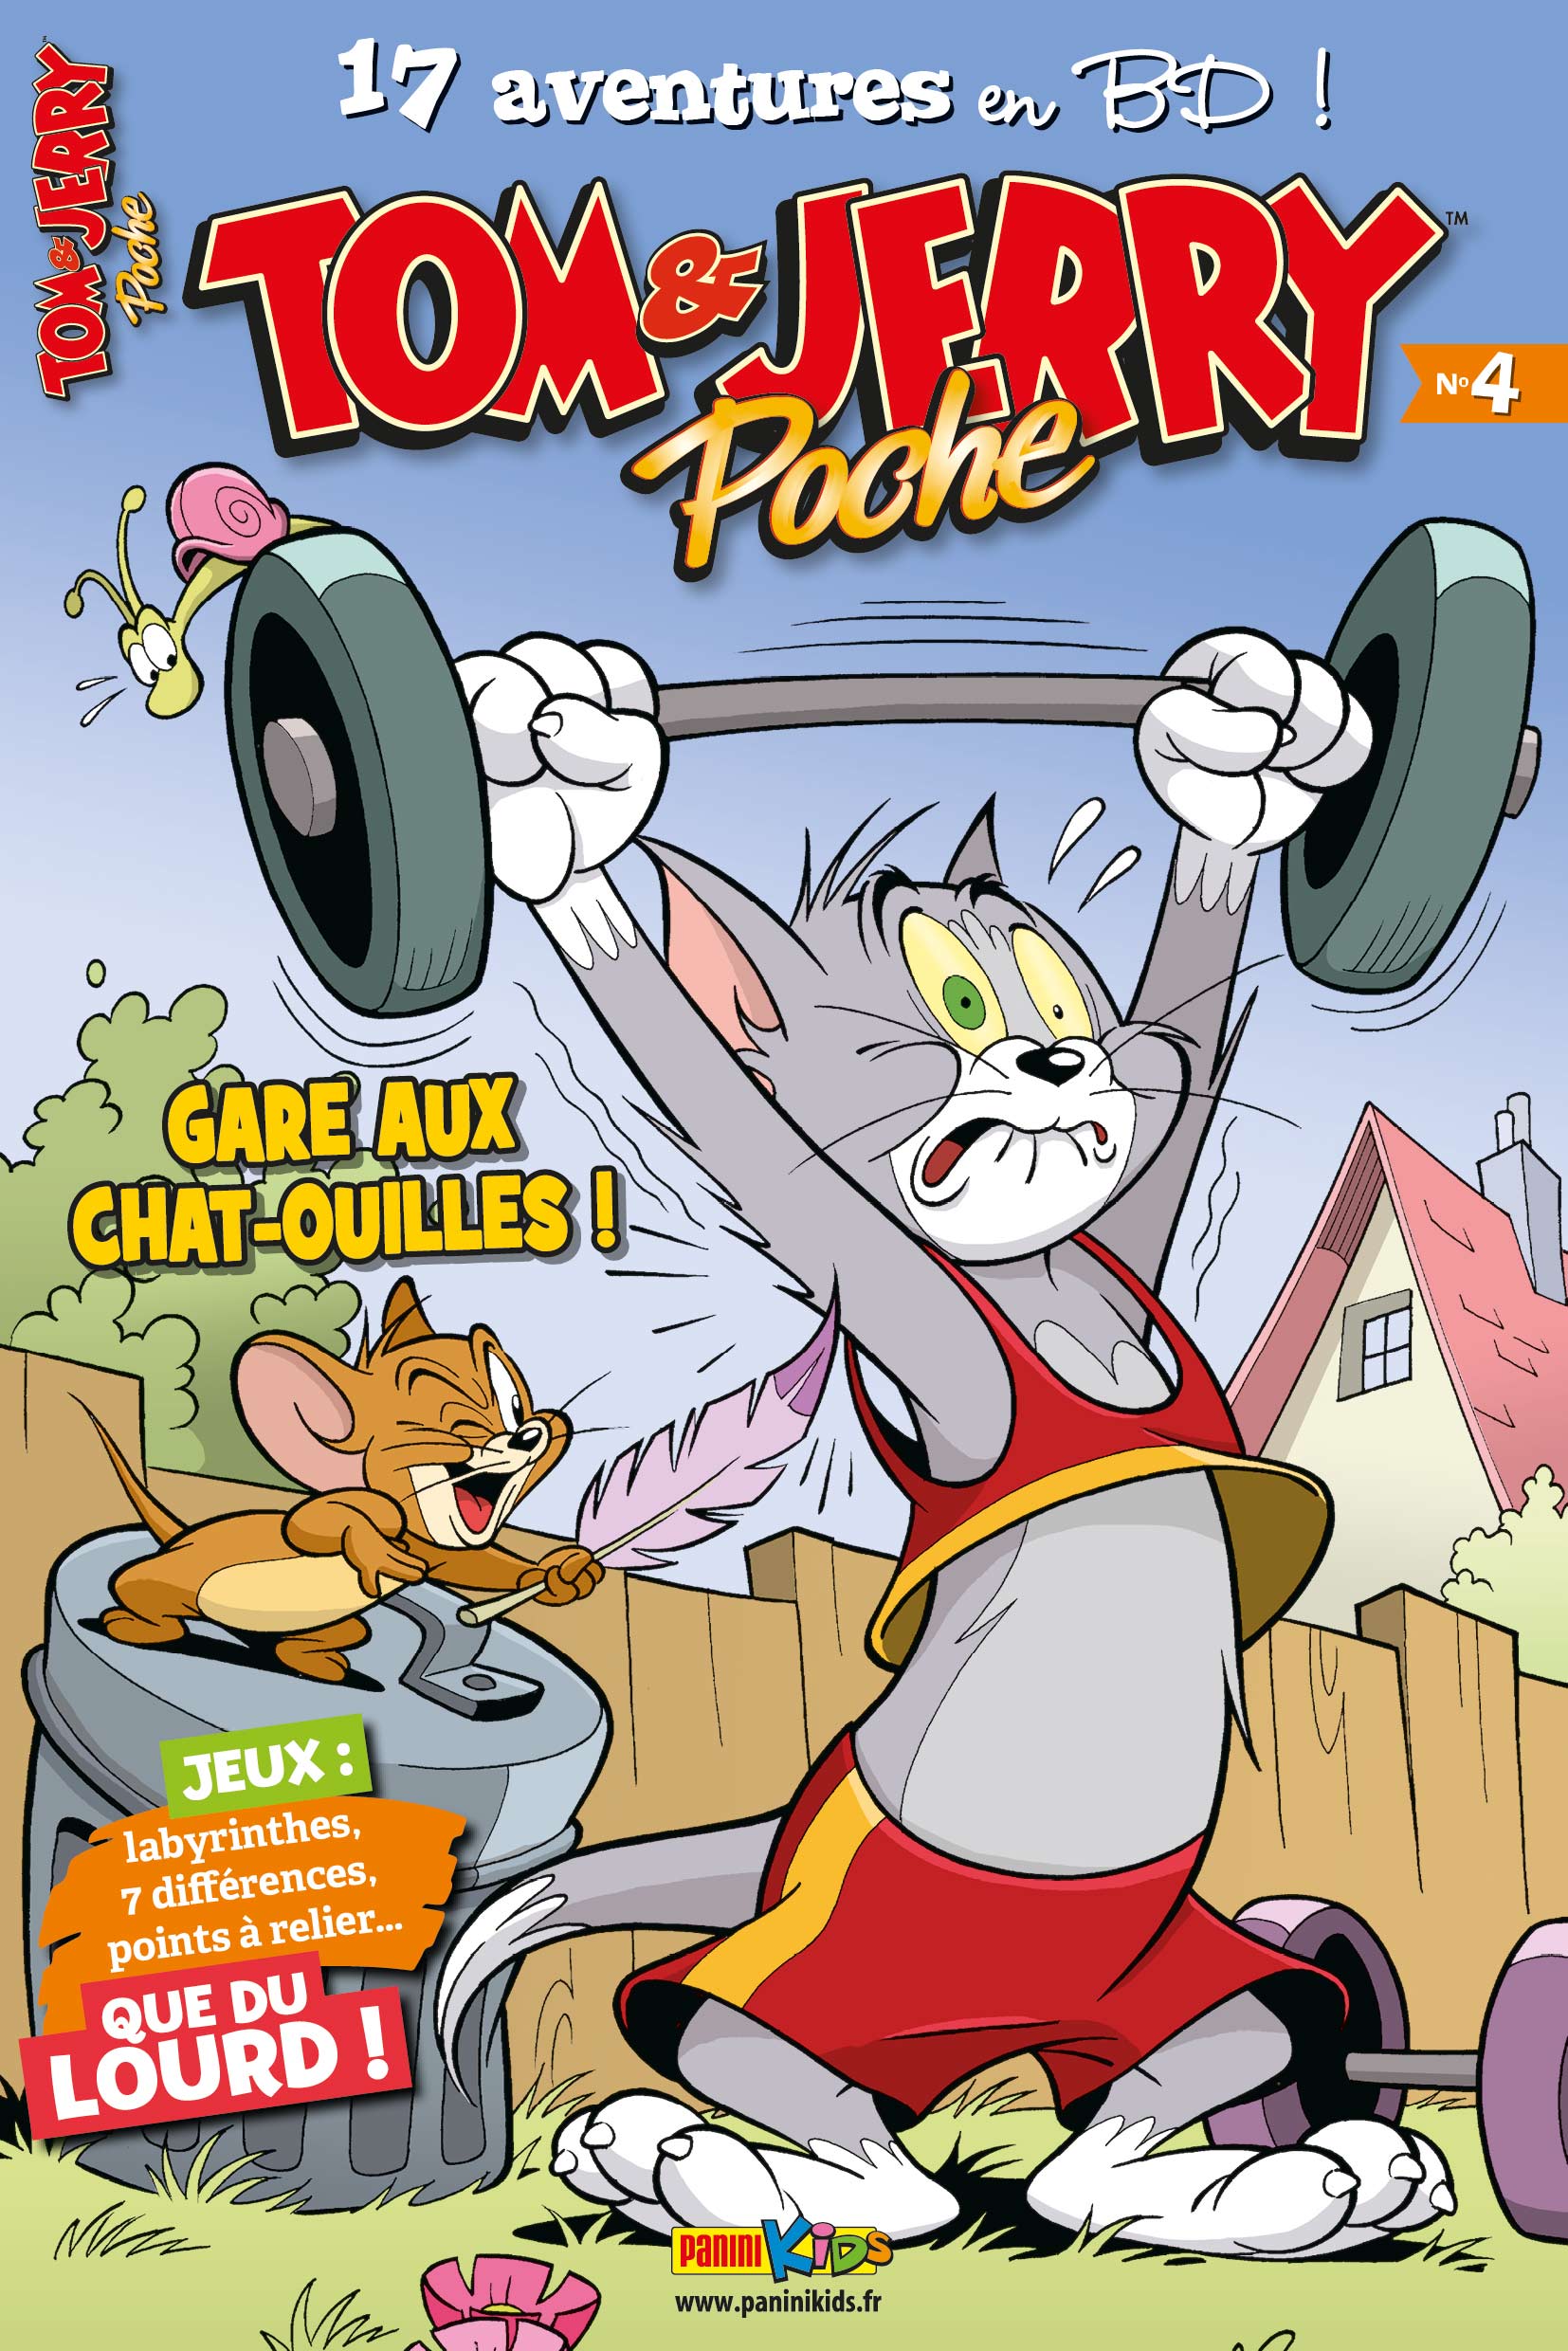 Les Pointilleuses / Panini Kids / Tom & Jerry Poche